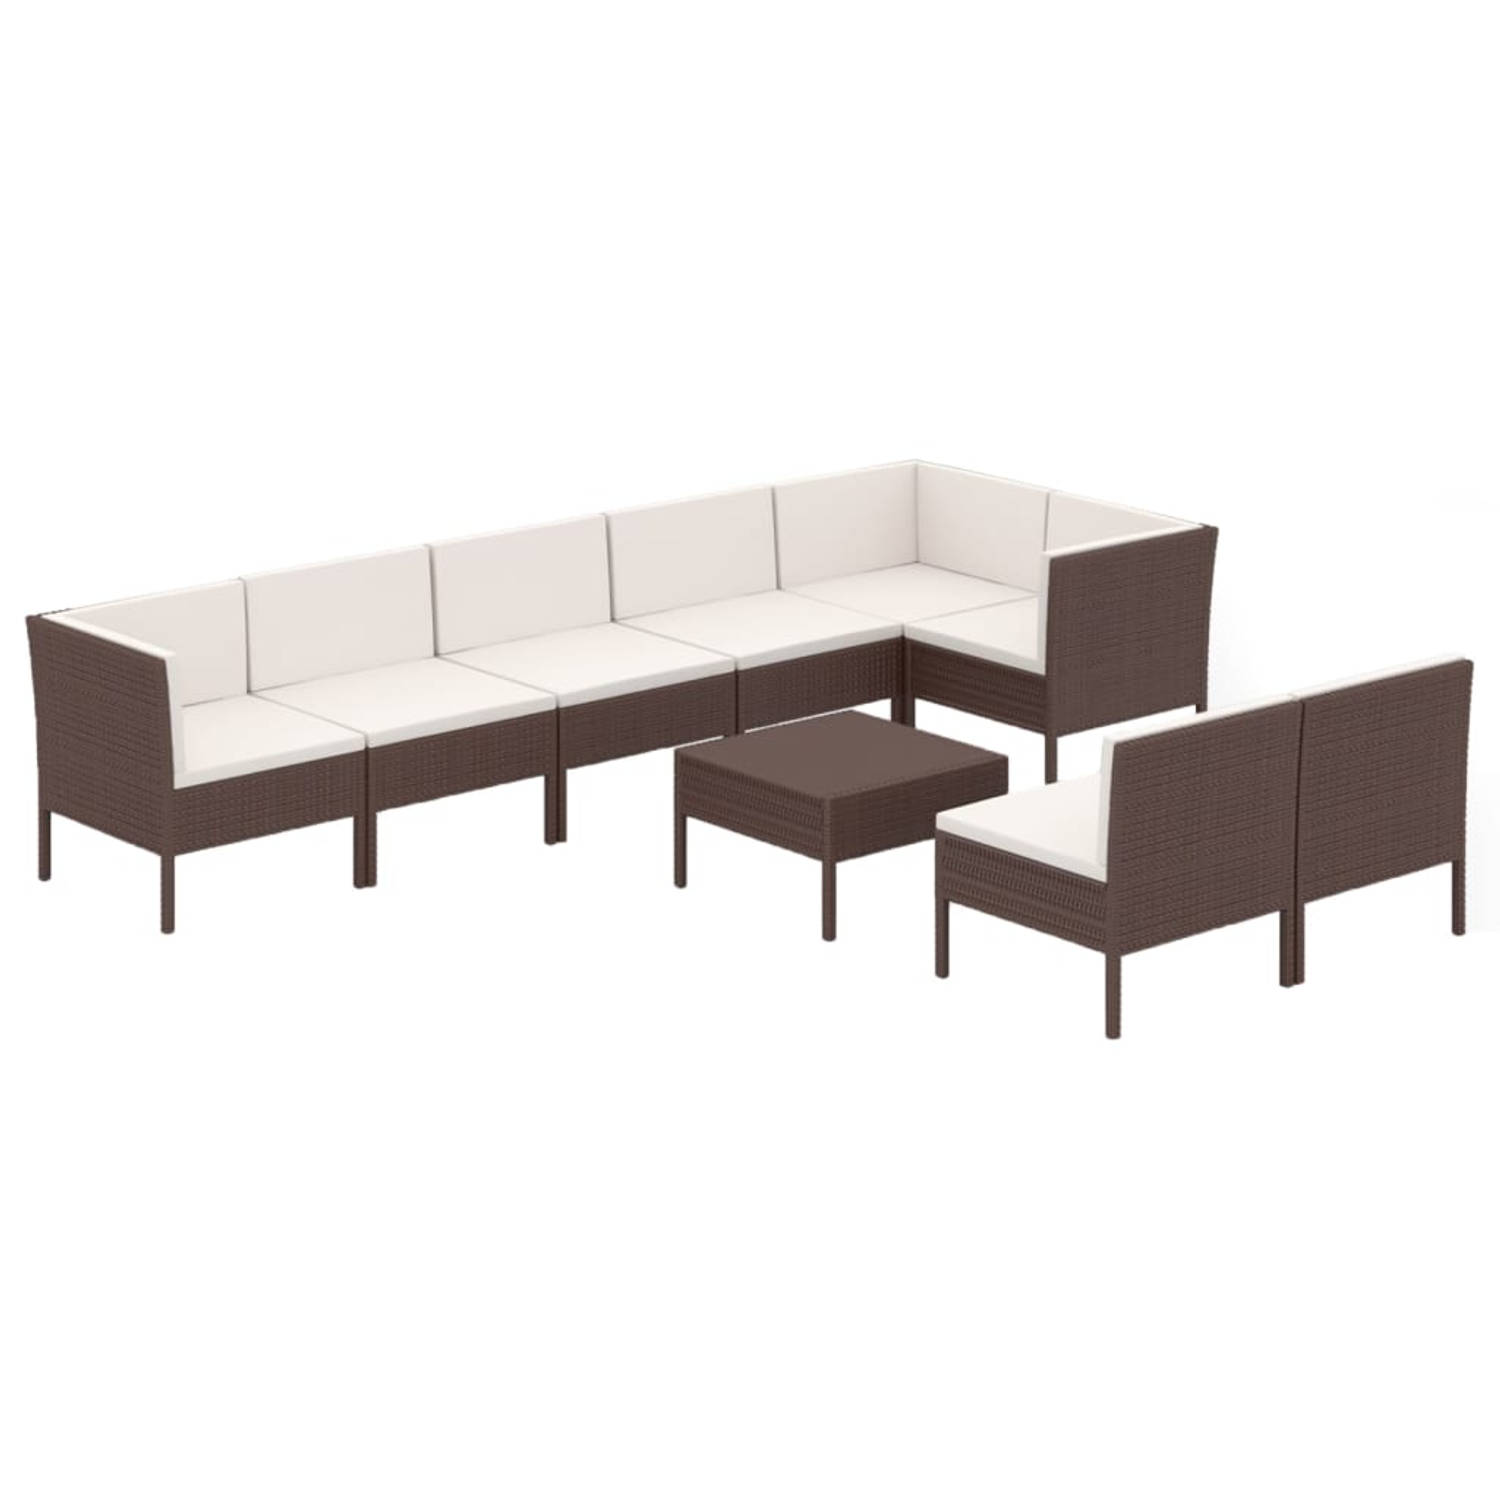 The Living Store Loungeset Garden Furniture - 3-Piece Modular - Brown - PE-rattan - Coated Steel